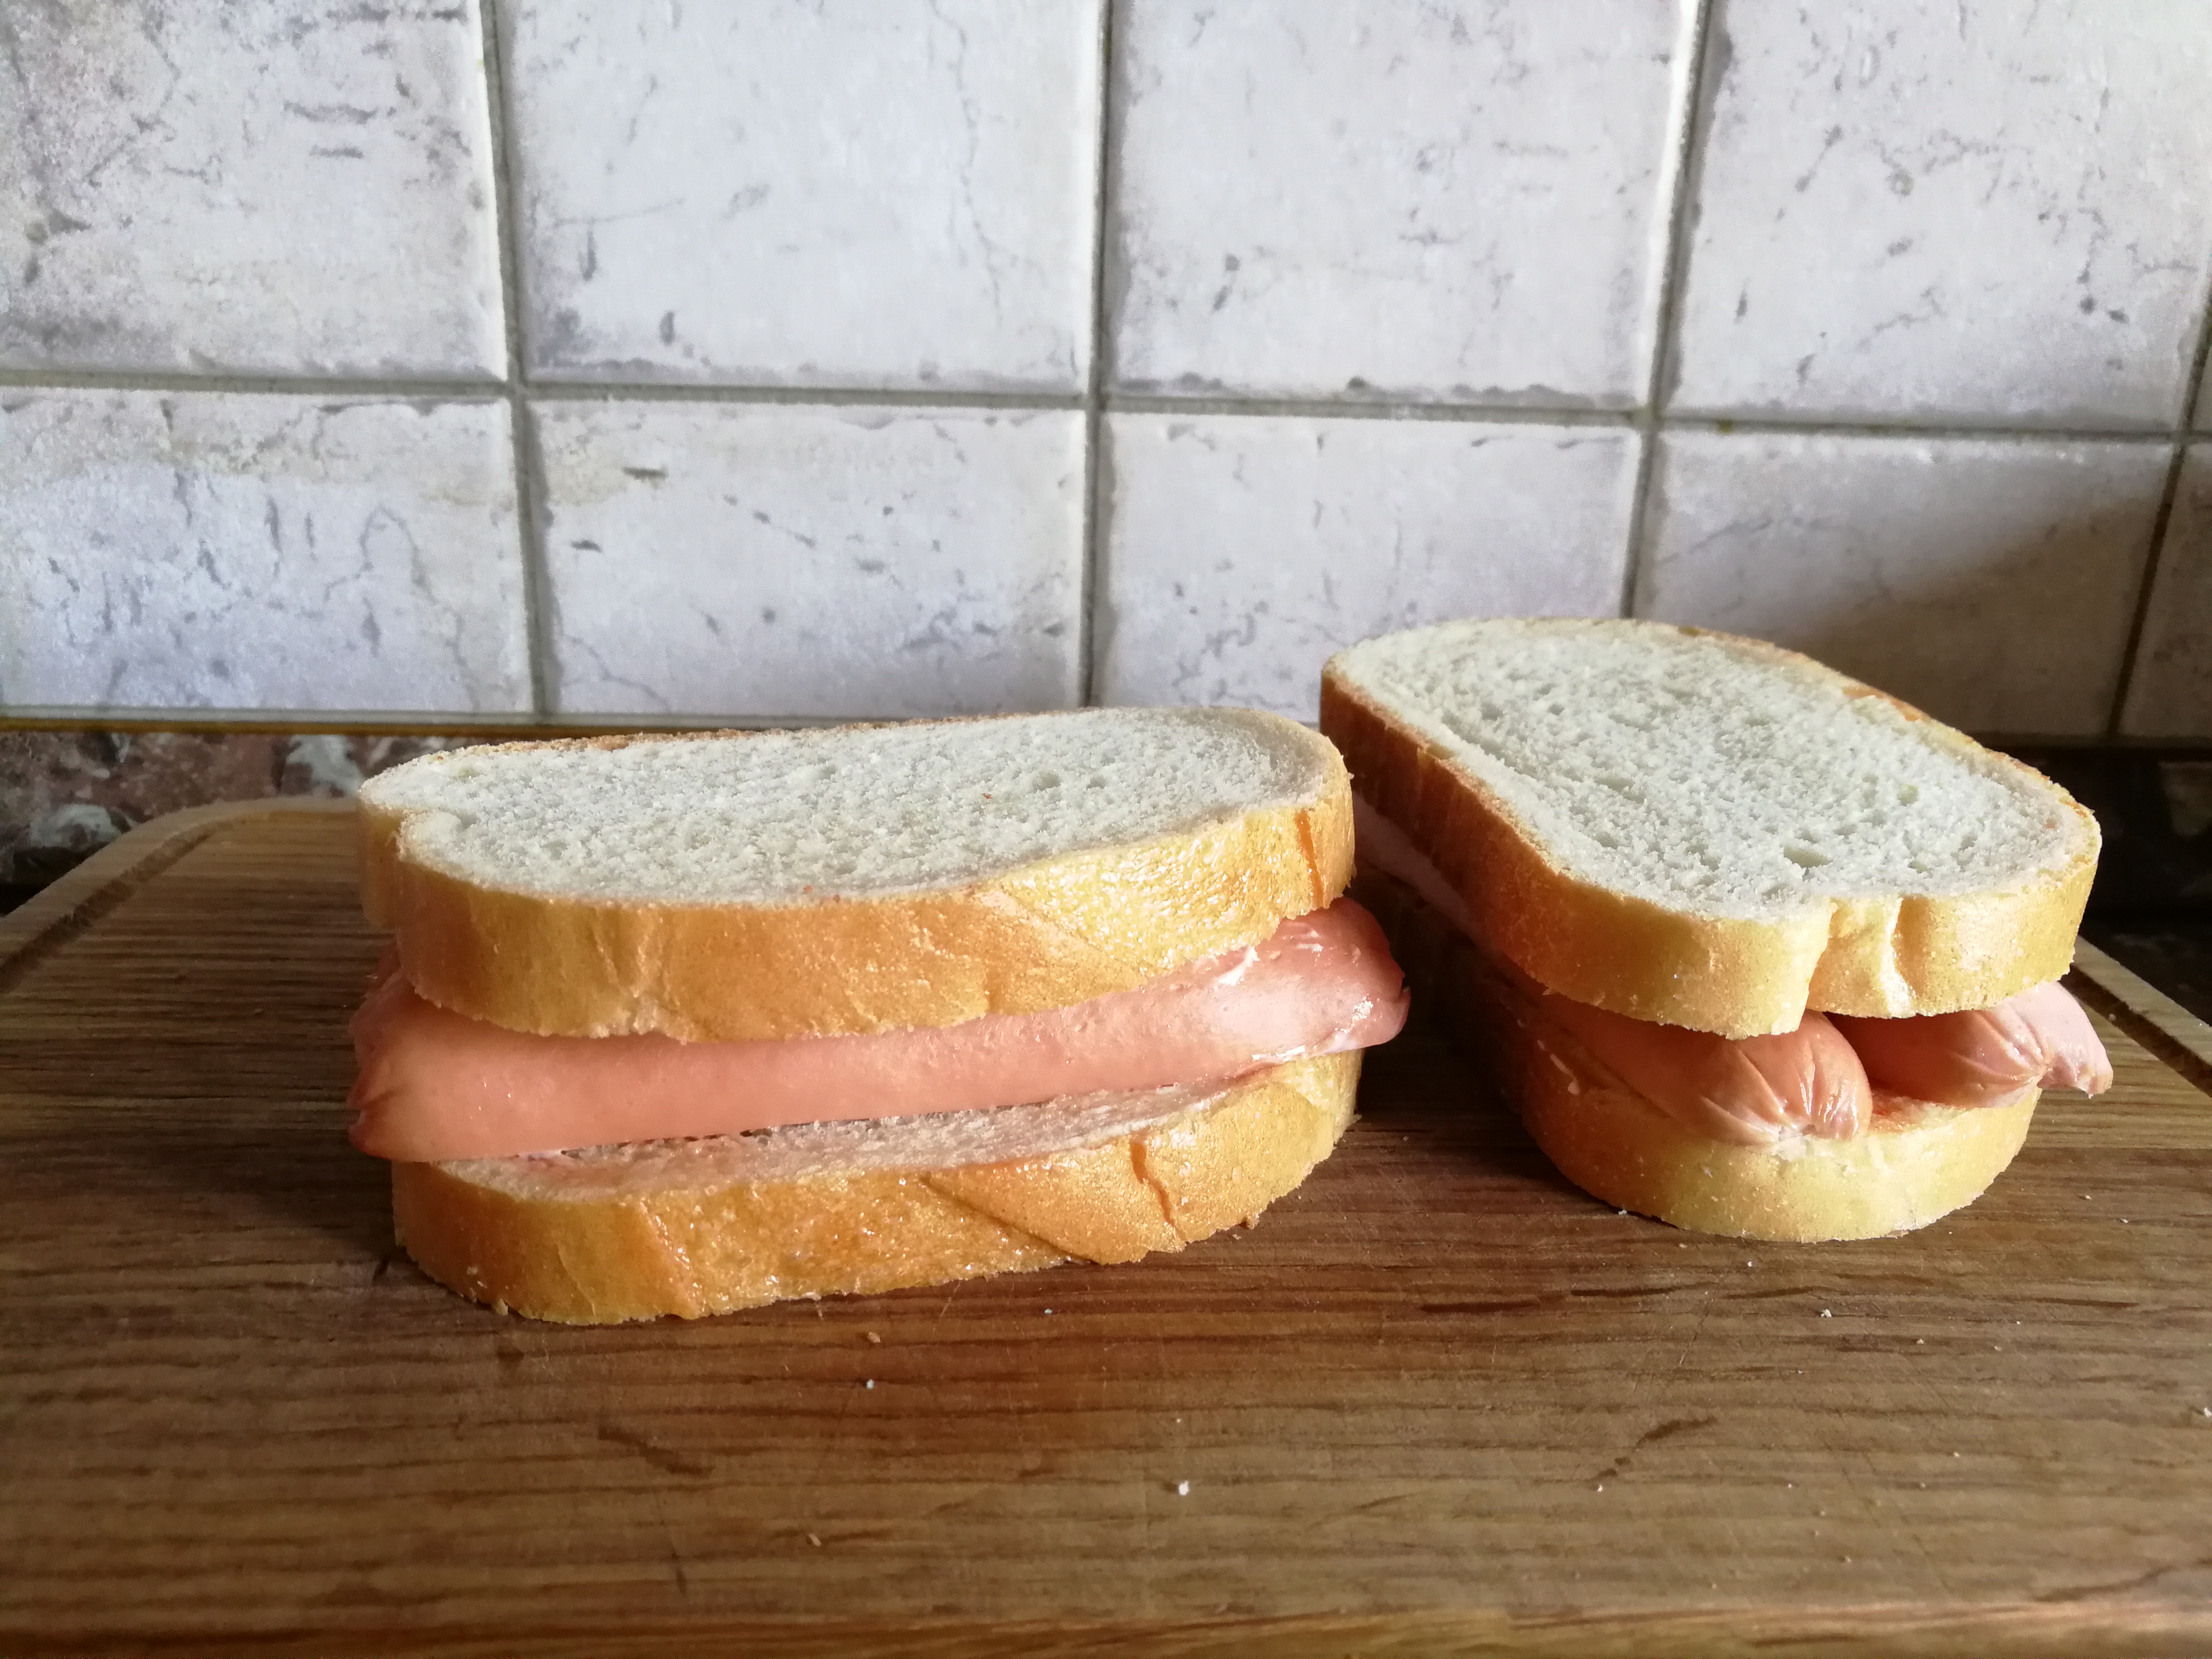 Бутерброды с сосисками